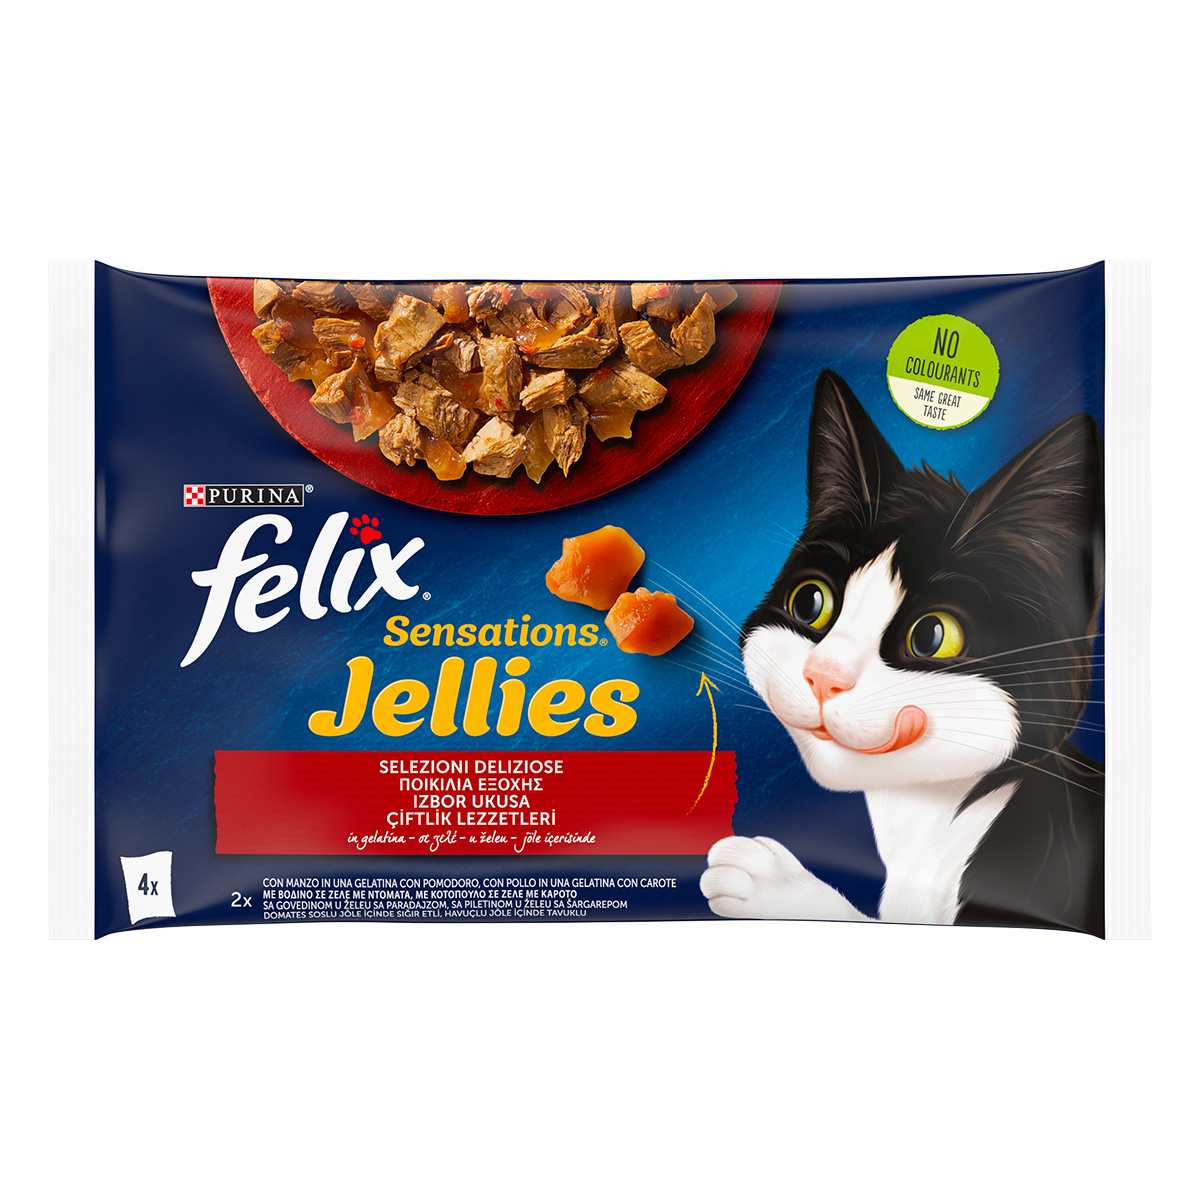 Felix Sensation Jellies Selezioni Deliziose